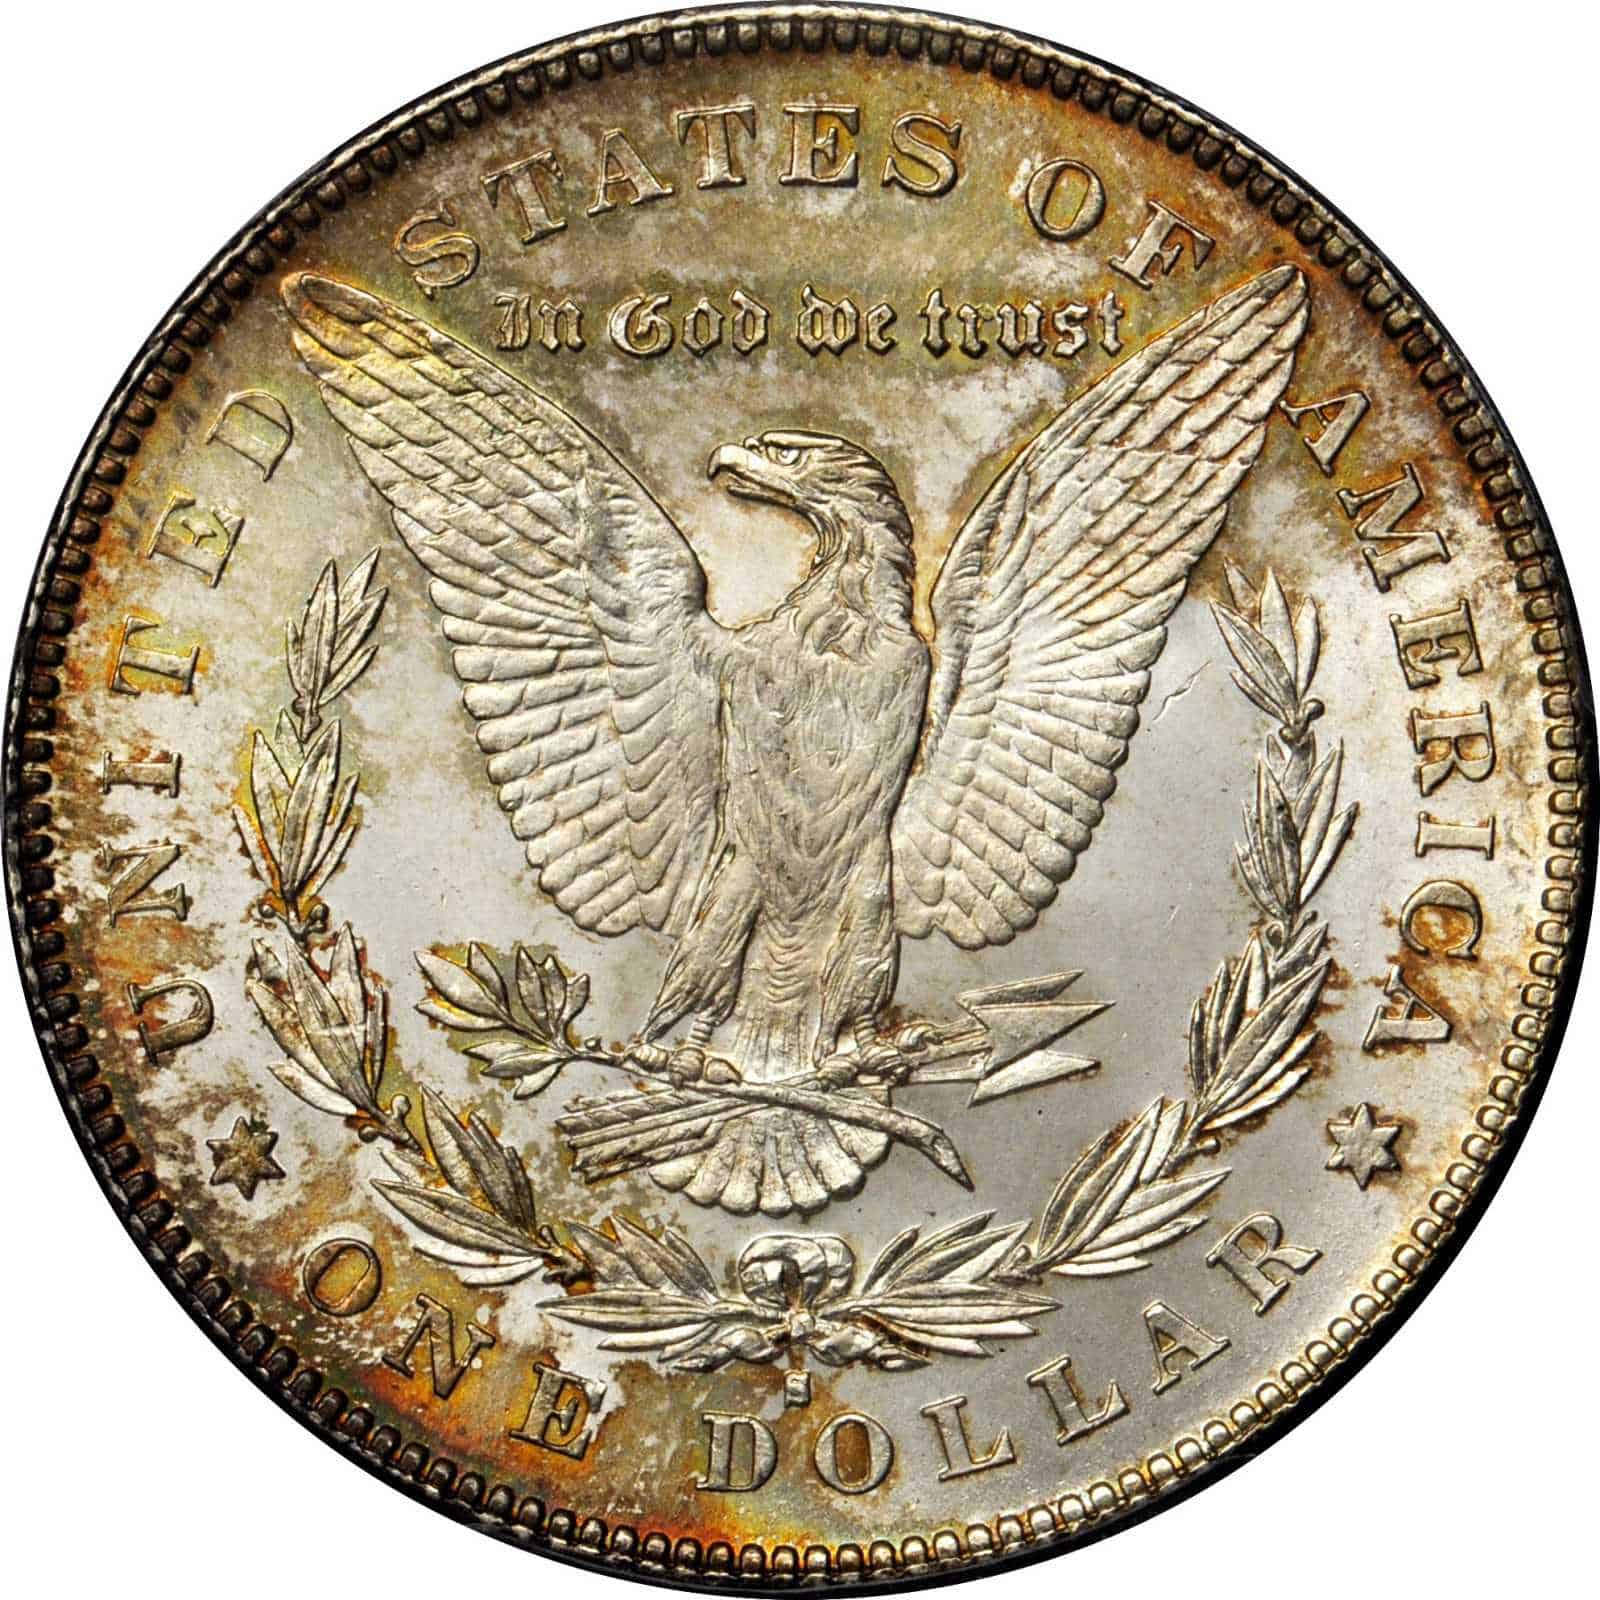 The Reverse of the 1878 Silver Morgan Dollar